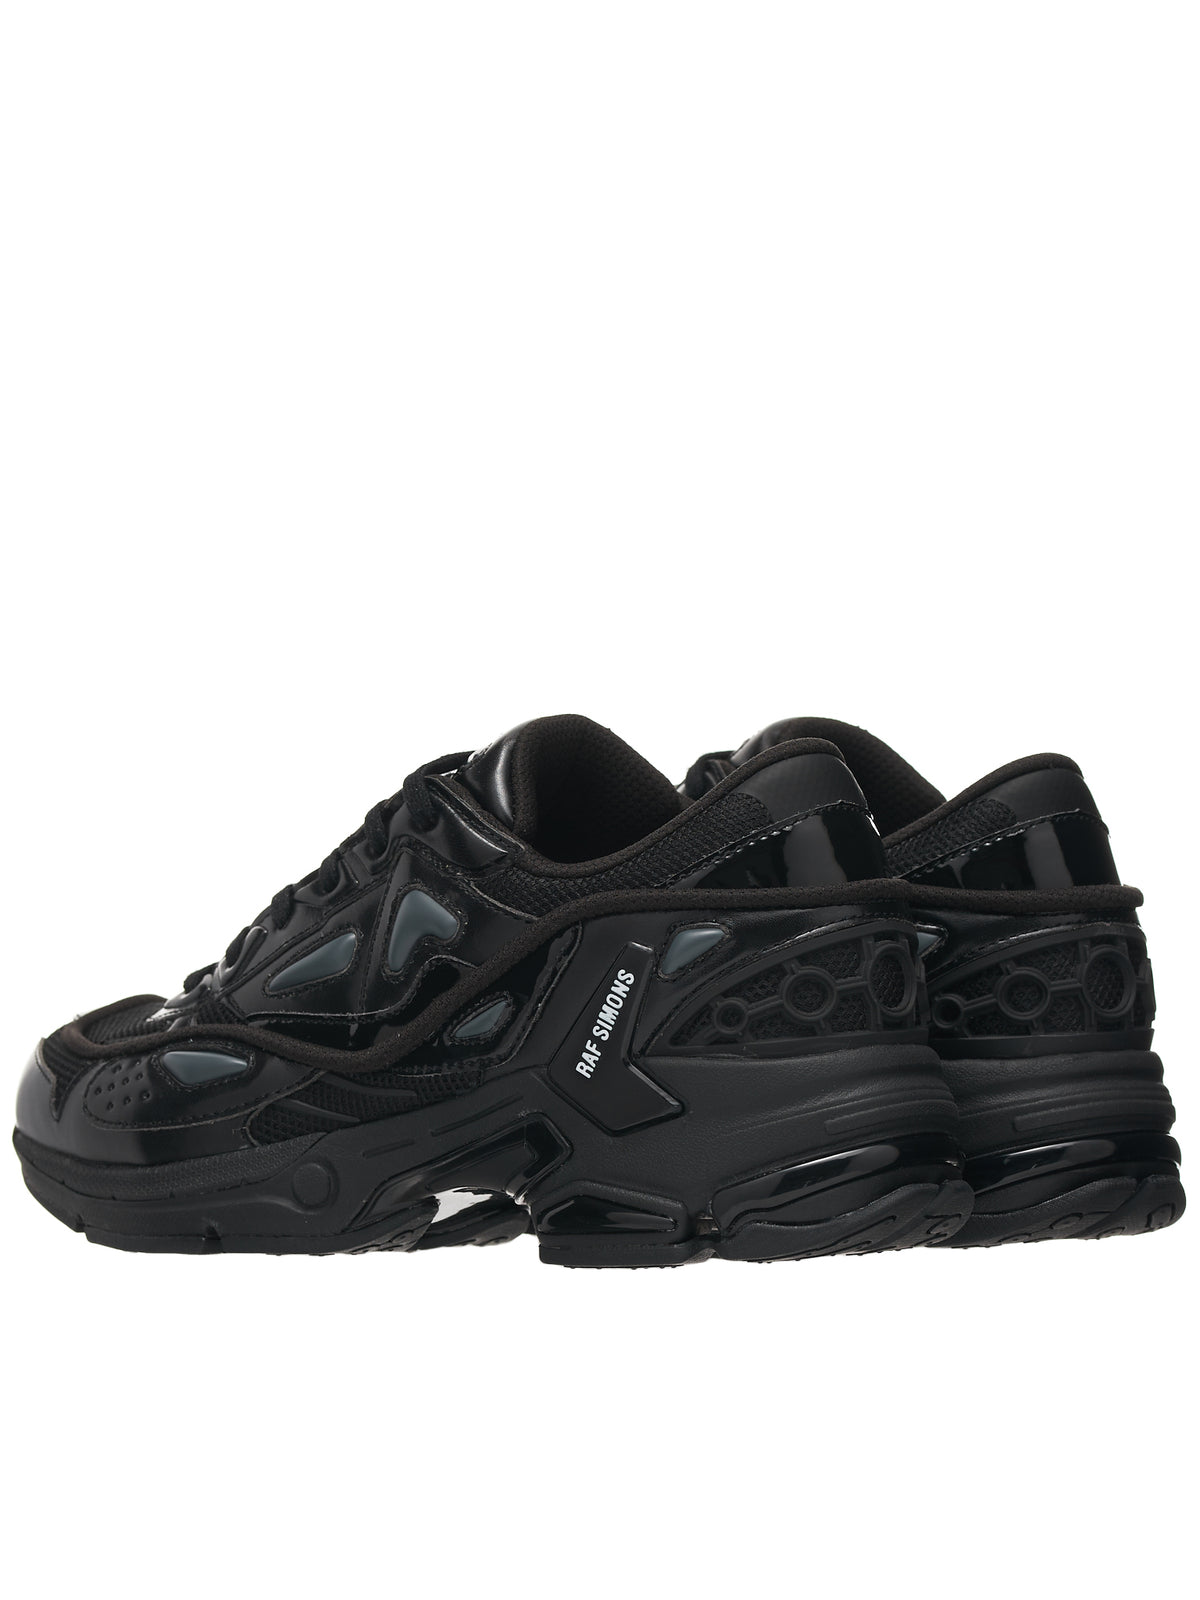 Pharaxus Sneakers (PHARAXUS-BLACK-GREY)